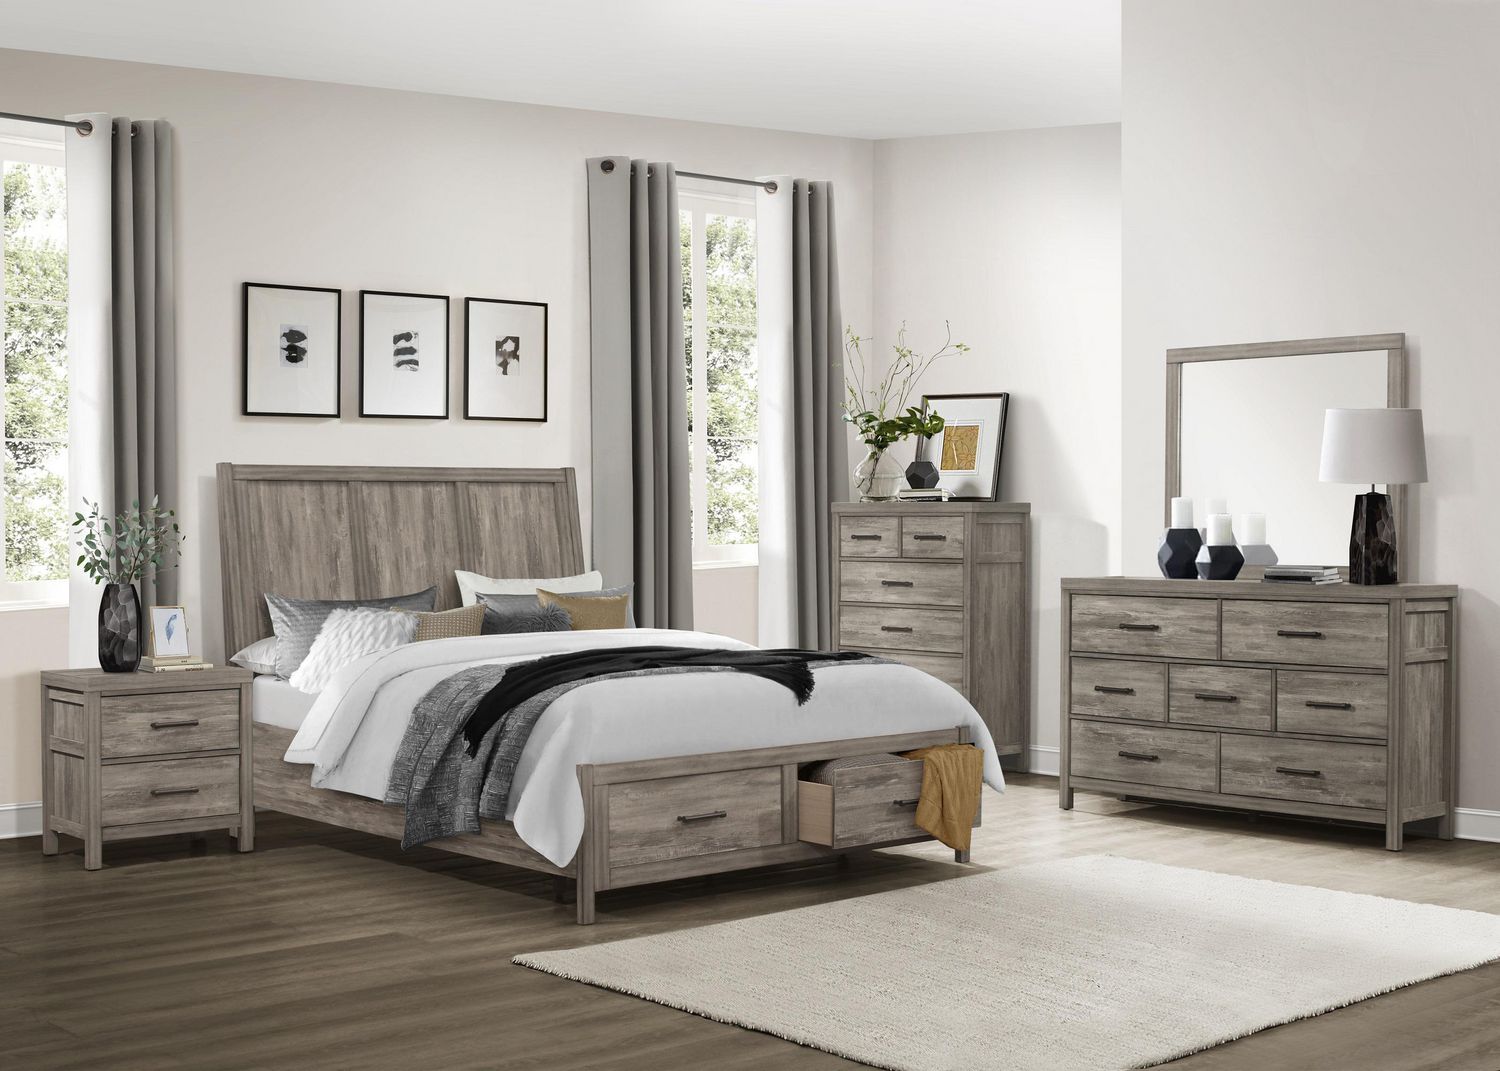 custom bedroom furniture canada